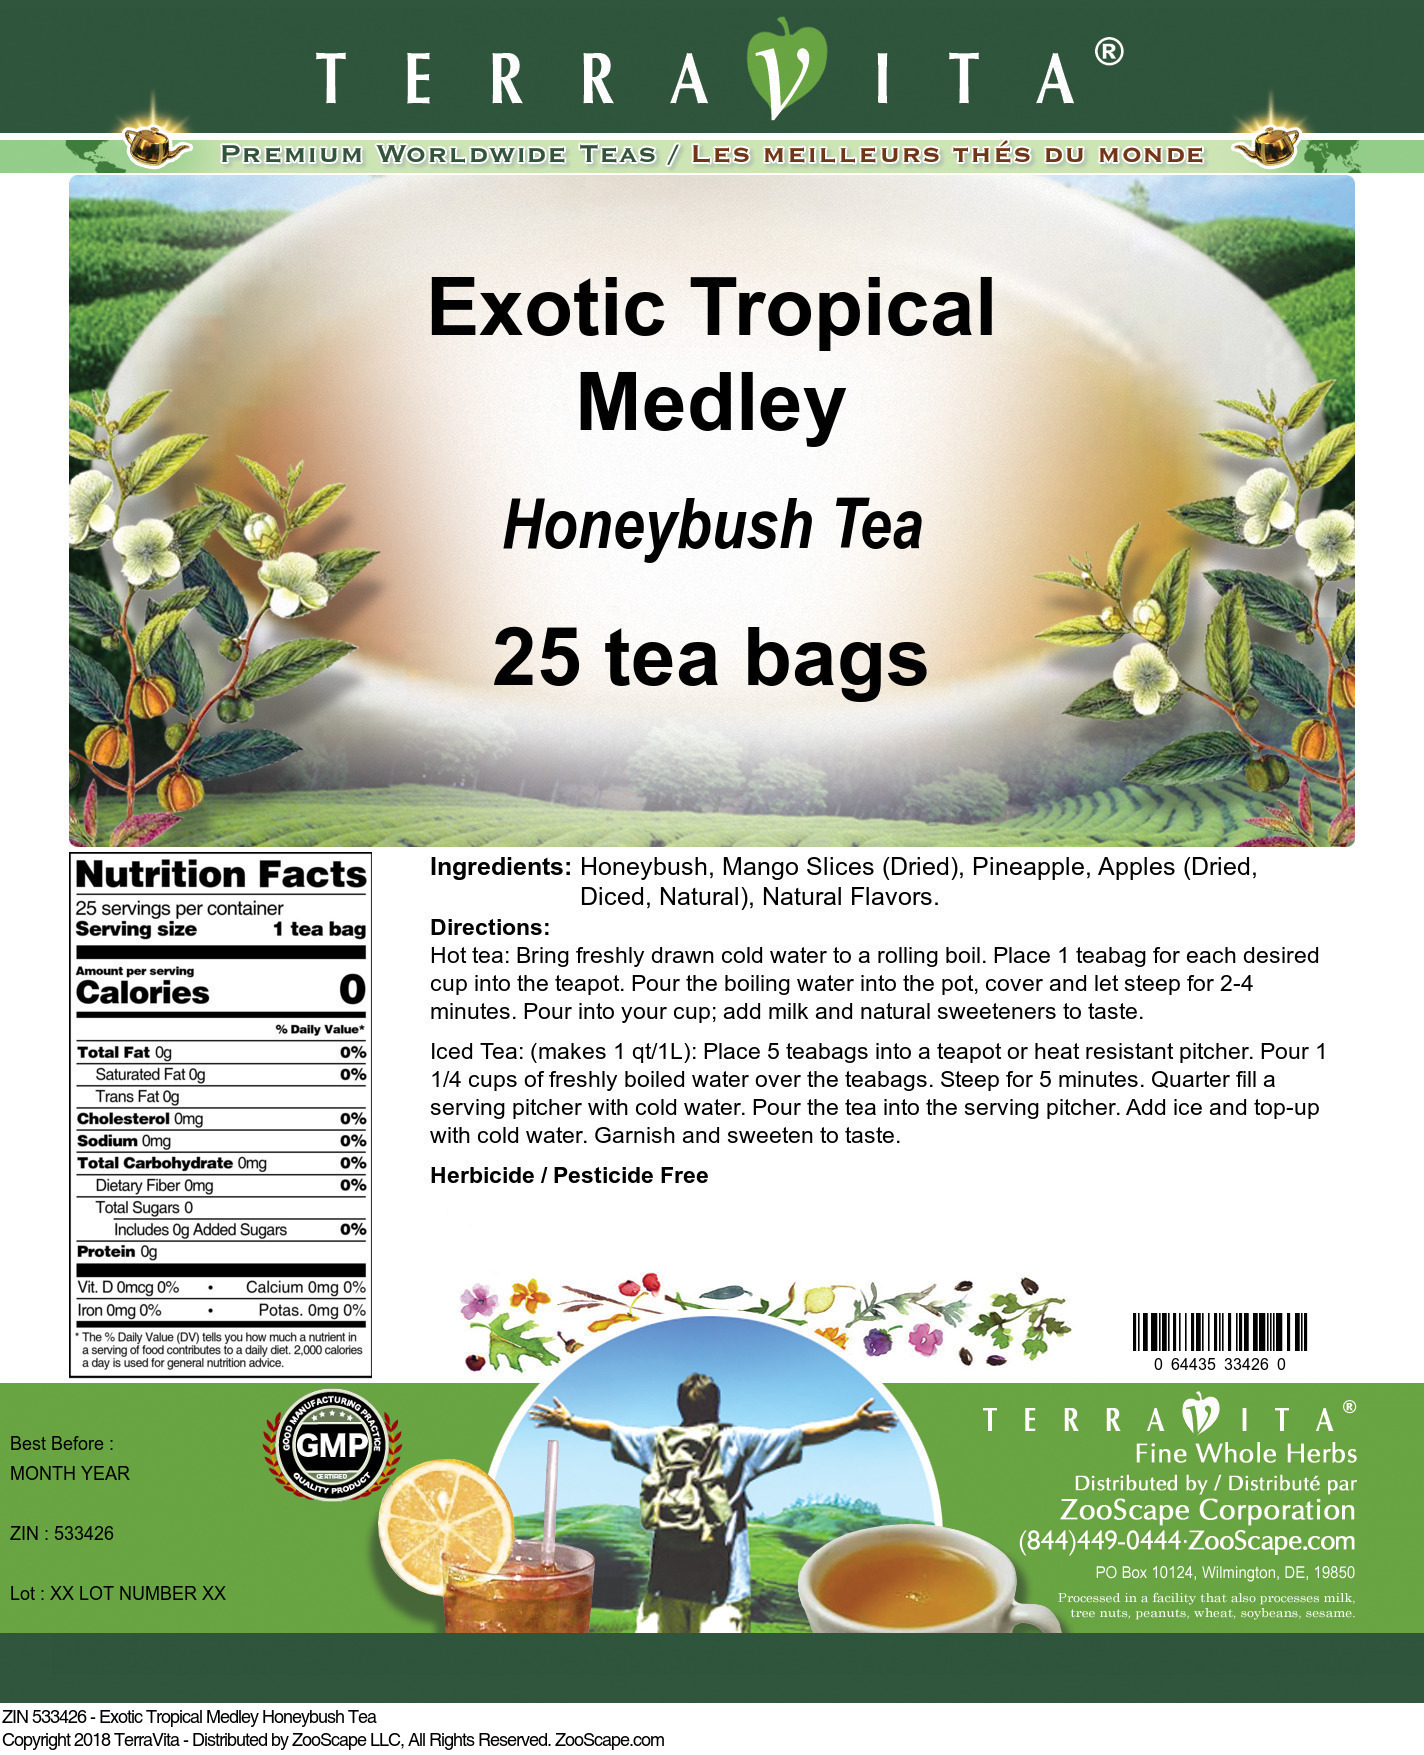 Exotic Tropical Medley Honeybush Tea - Label